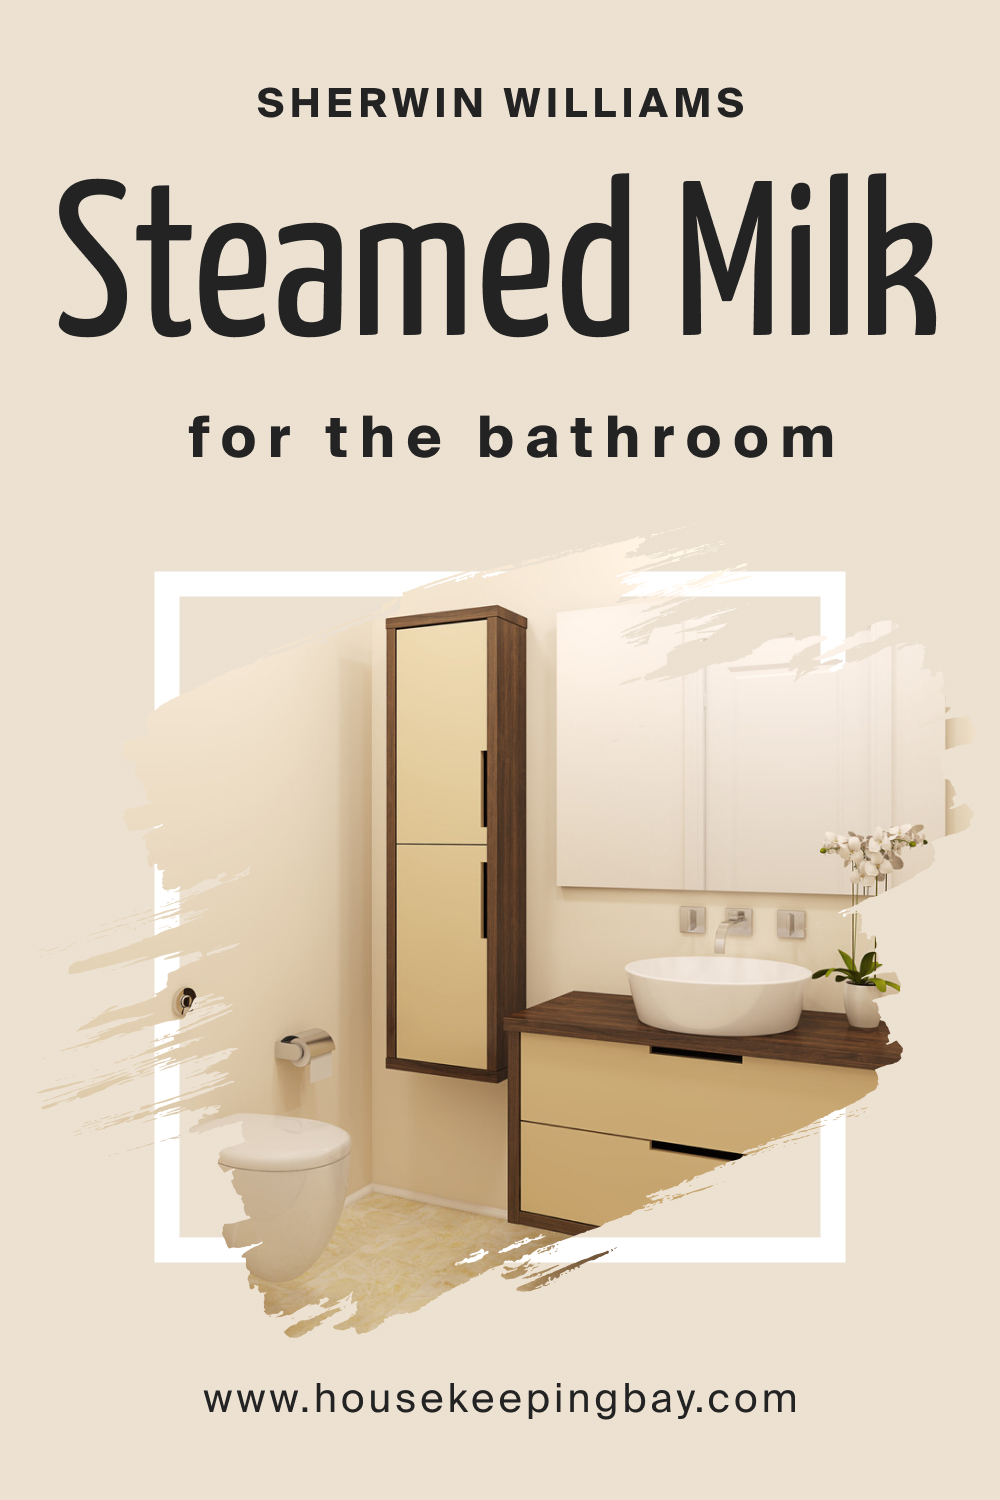 Sherwin Williams. SW Steamed Milk in the Bathroom